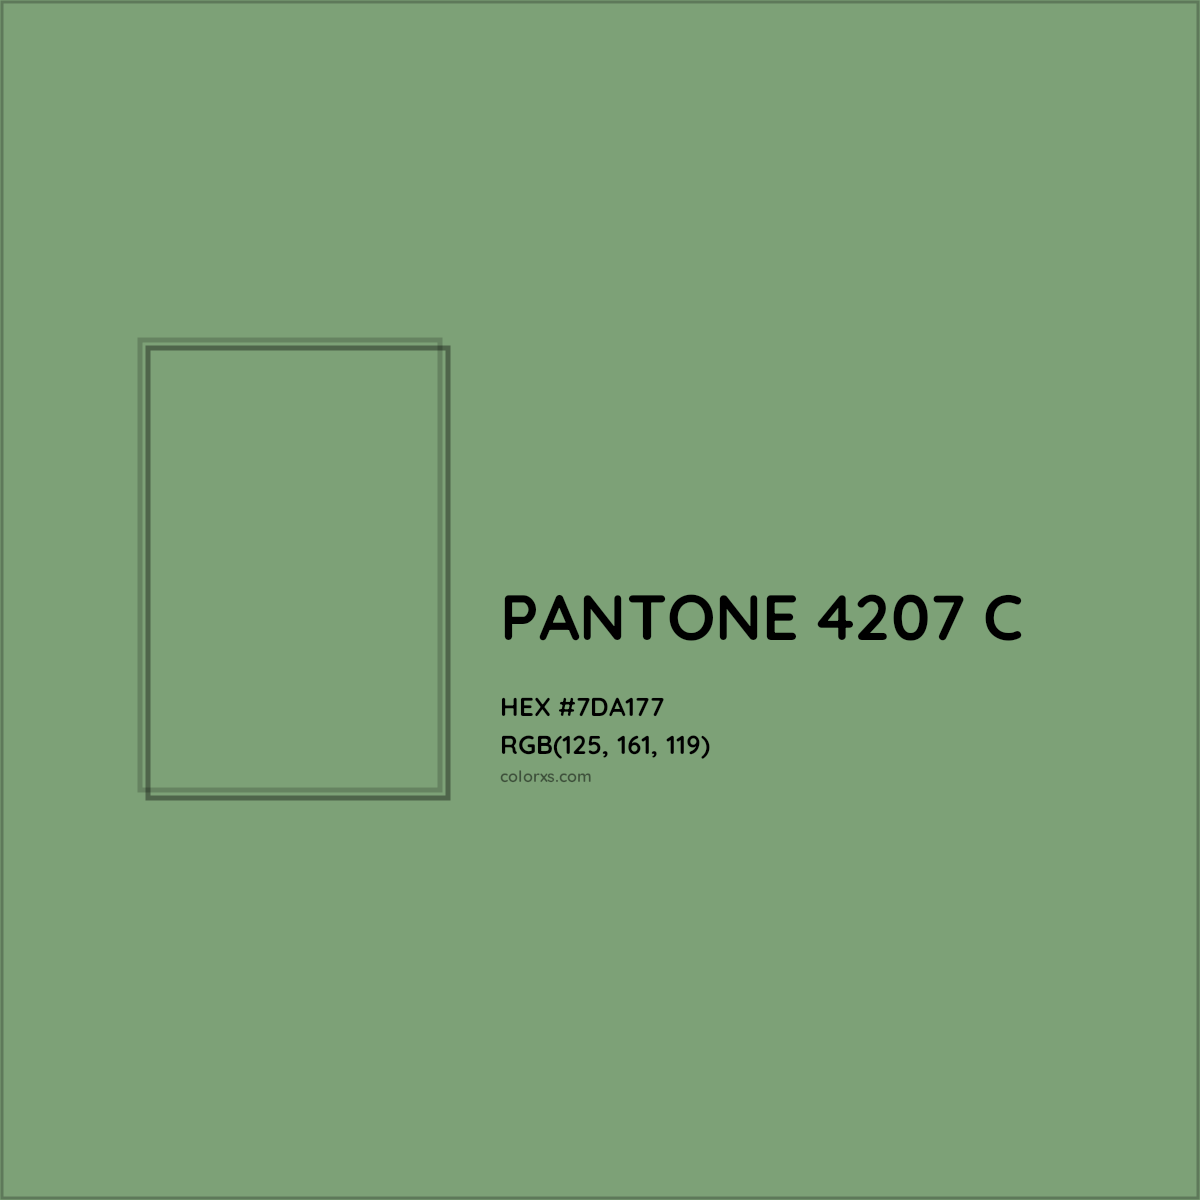 HEX #7DA177 PANTONE 4207 C CMS Pantone PMS - Color Code